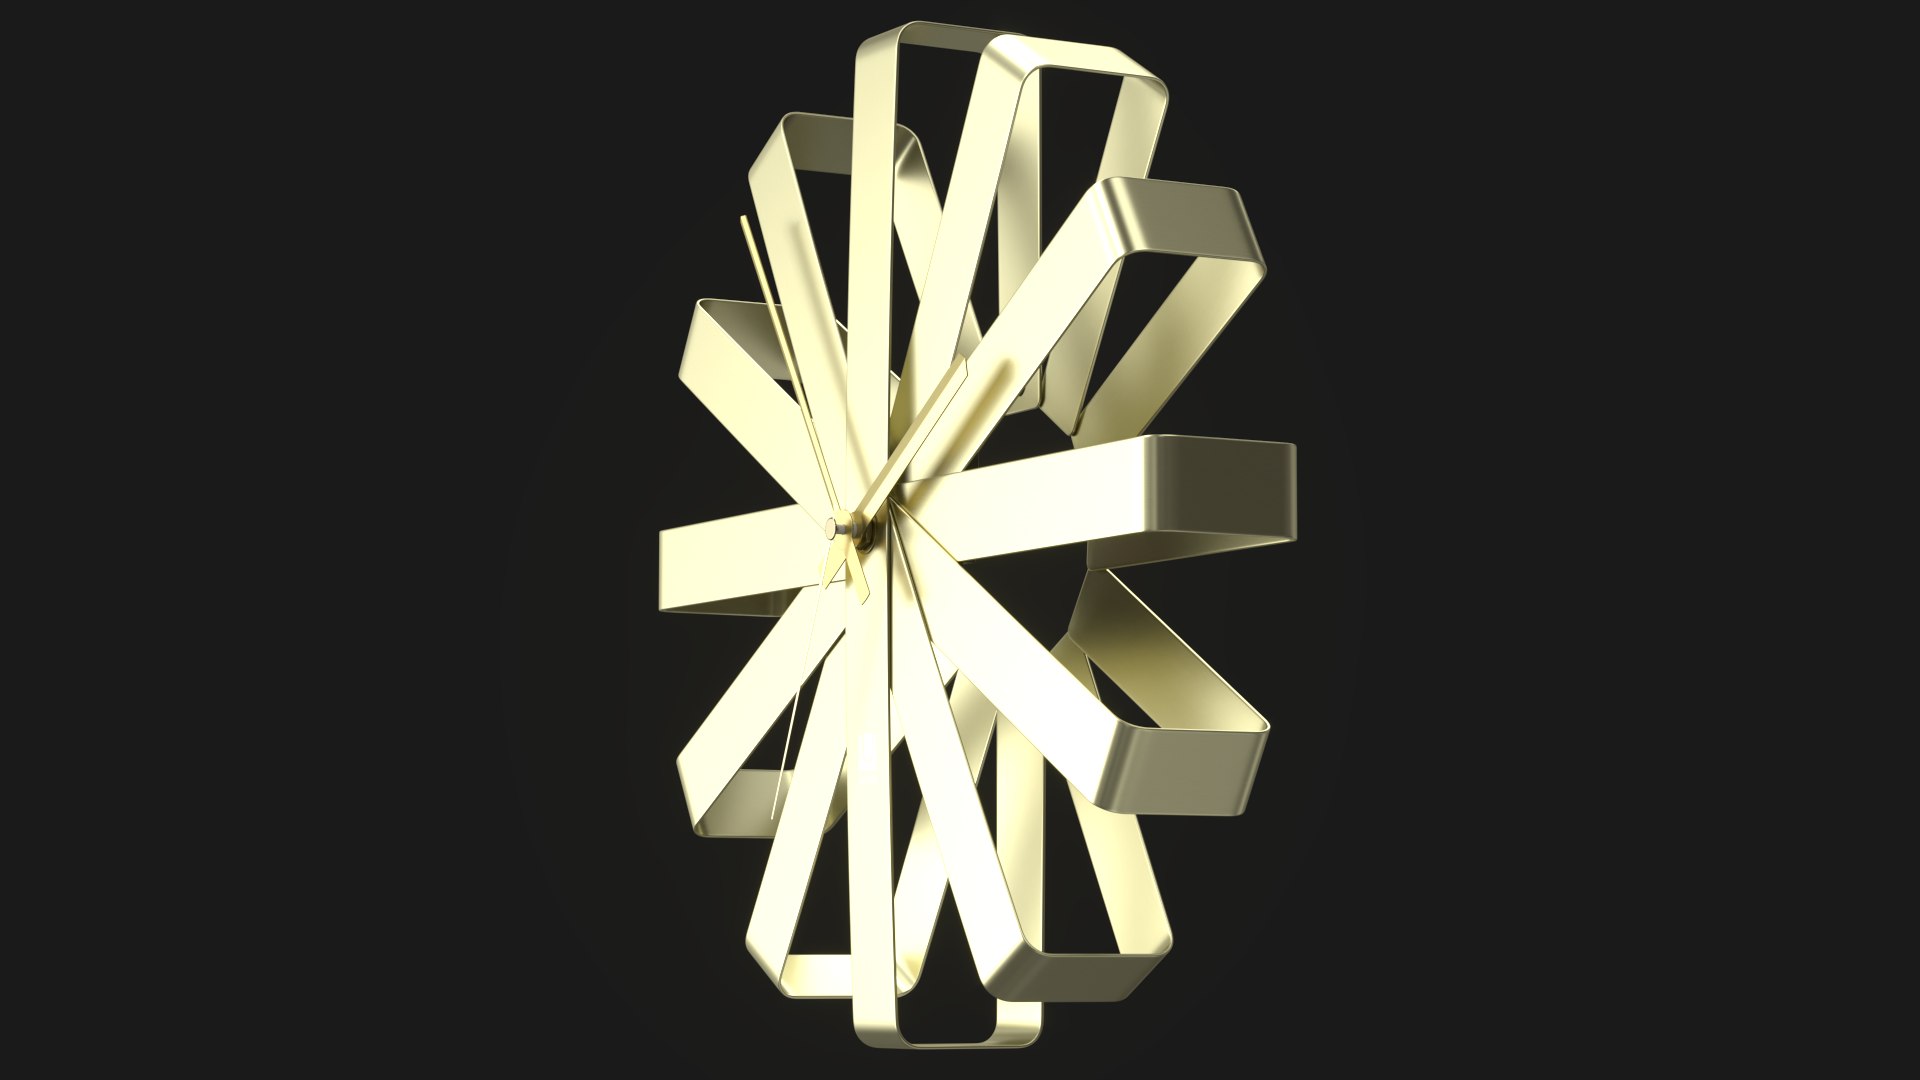 3D Realistic Wall Clock Umbra - TurboSquid 1487977